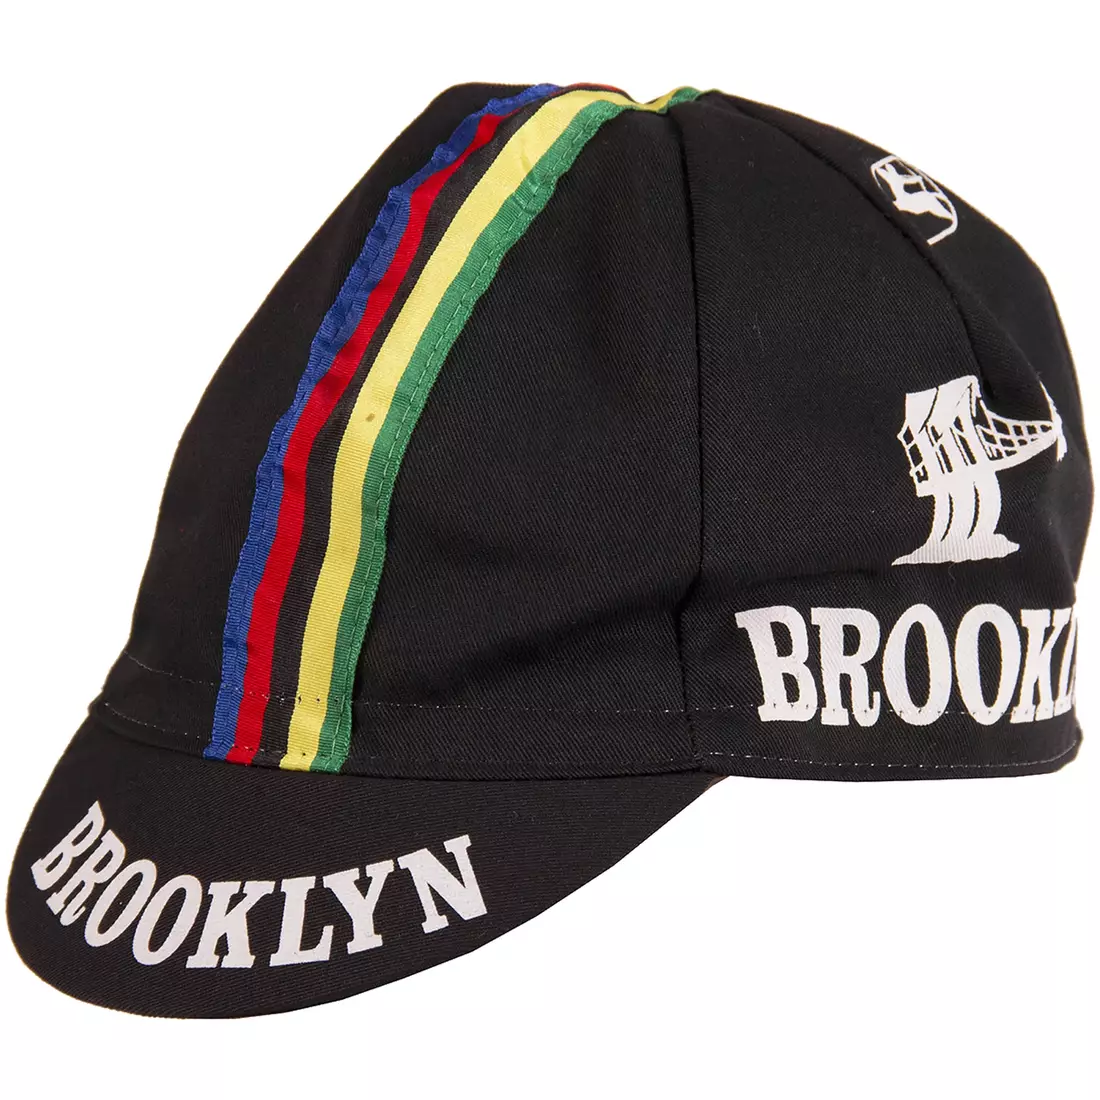 GIORDANA SS18 cycling cap - Brooklyn - Black w/ Stripe tape GI-S6-COCA-BROK-BLCK one size